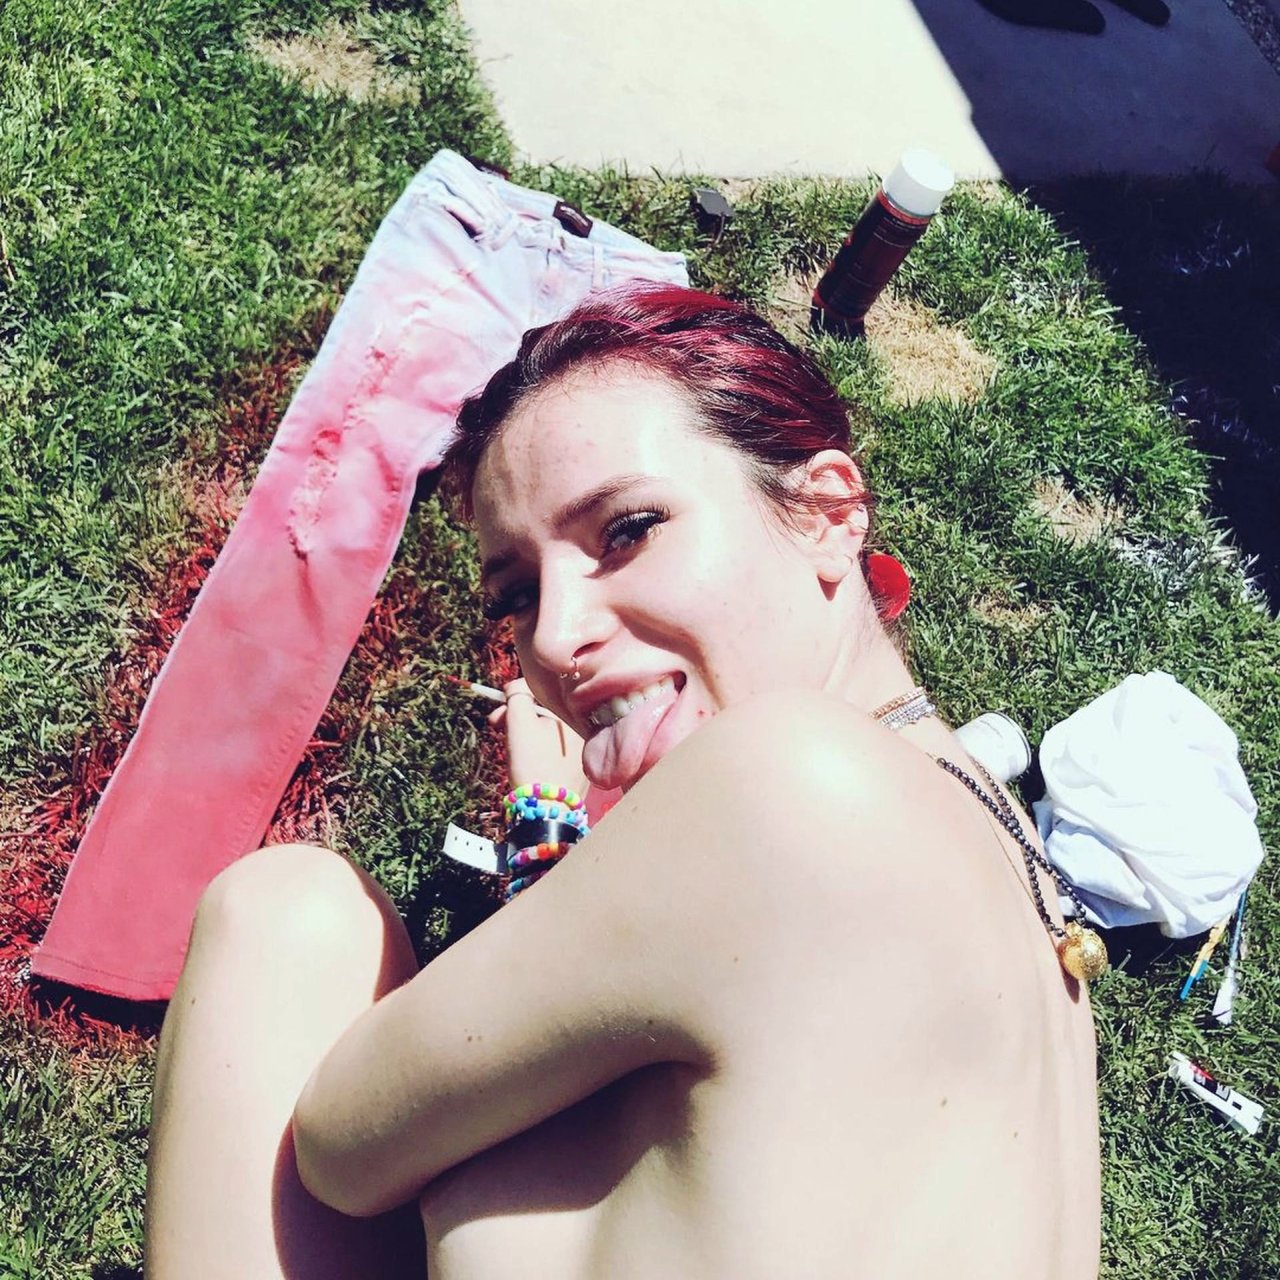 https://thefappeningblog.com/wp-content/uploads/2019/08/Bella-Thorne-Nude-Photos-TheFappeningBlog.com-4.jpg